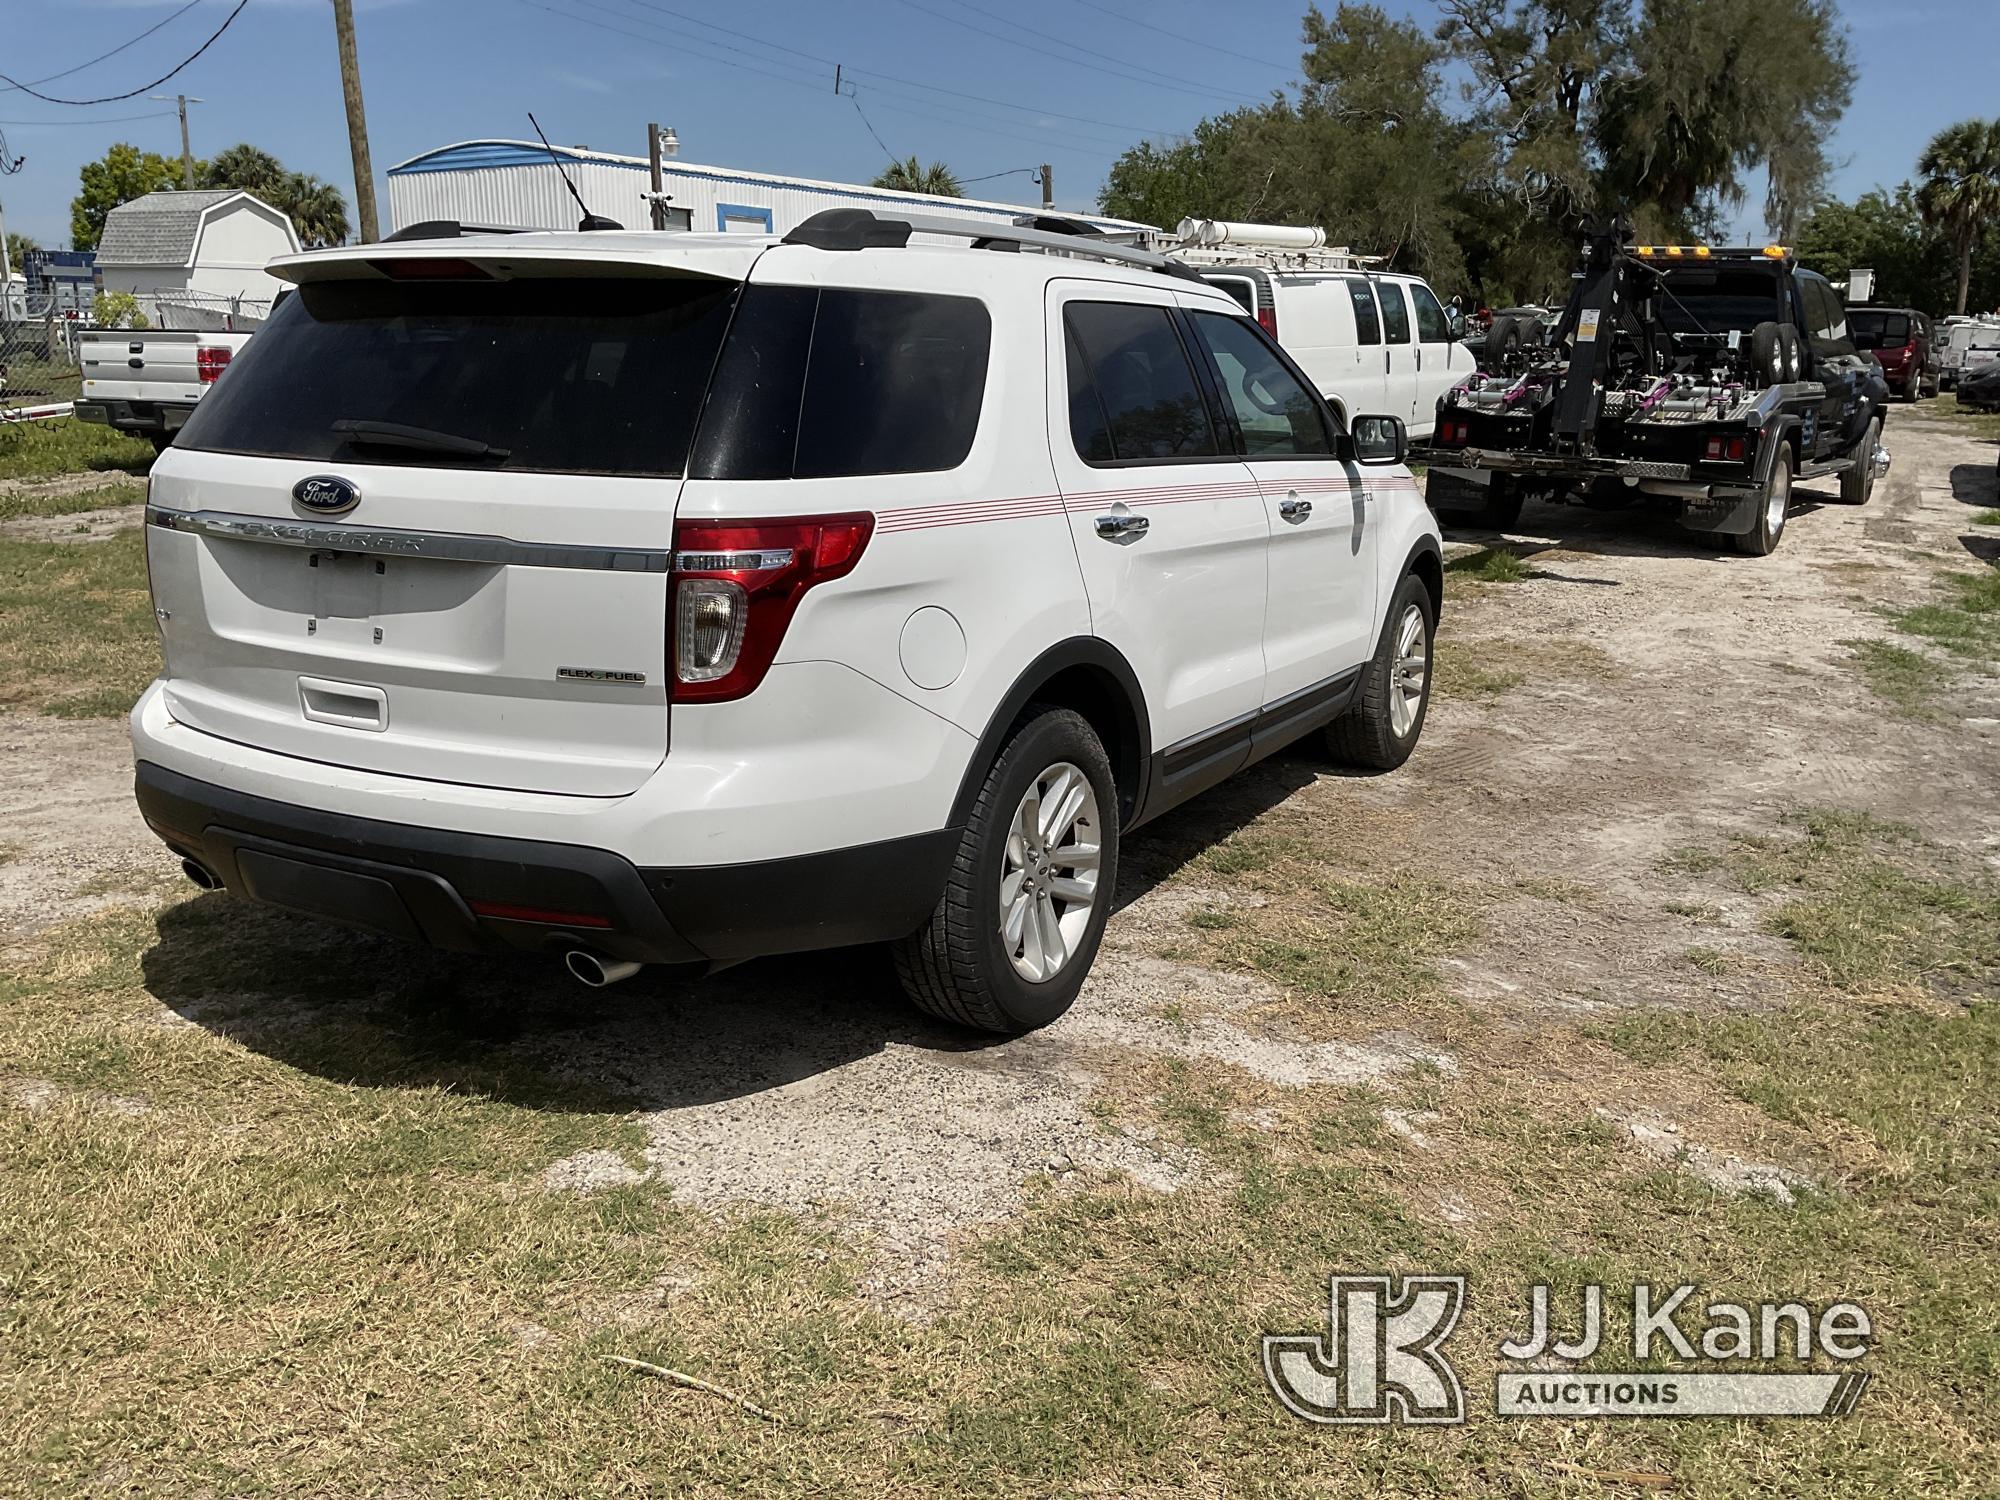 (Tampa, FL) 2013 Ford Explorer Sport Utility Vehicle Runs & Moves) (Jump To Start, Transmission Bad,